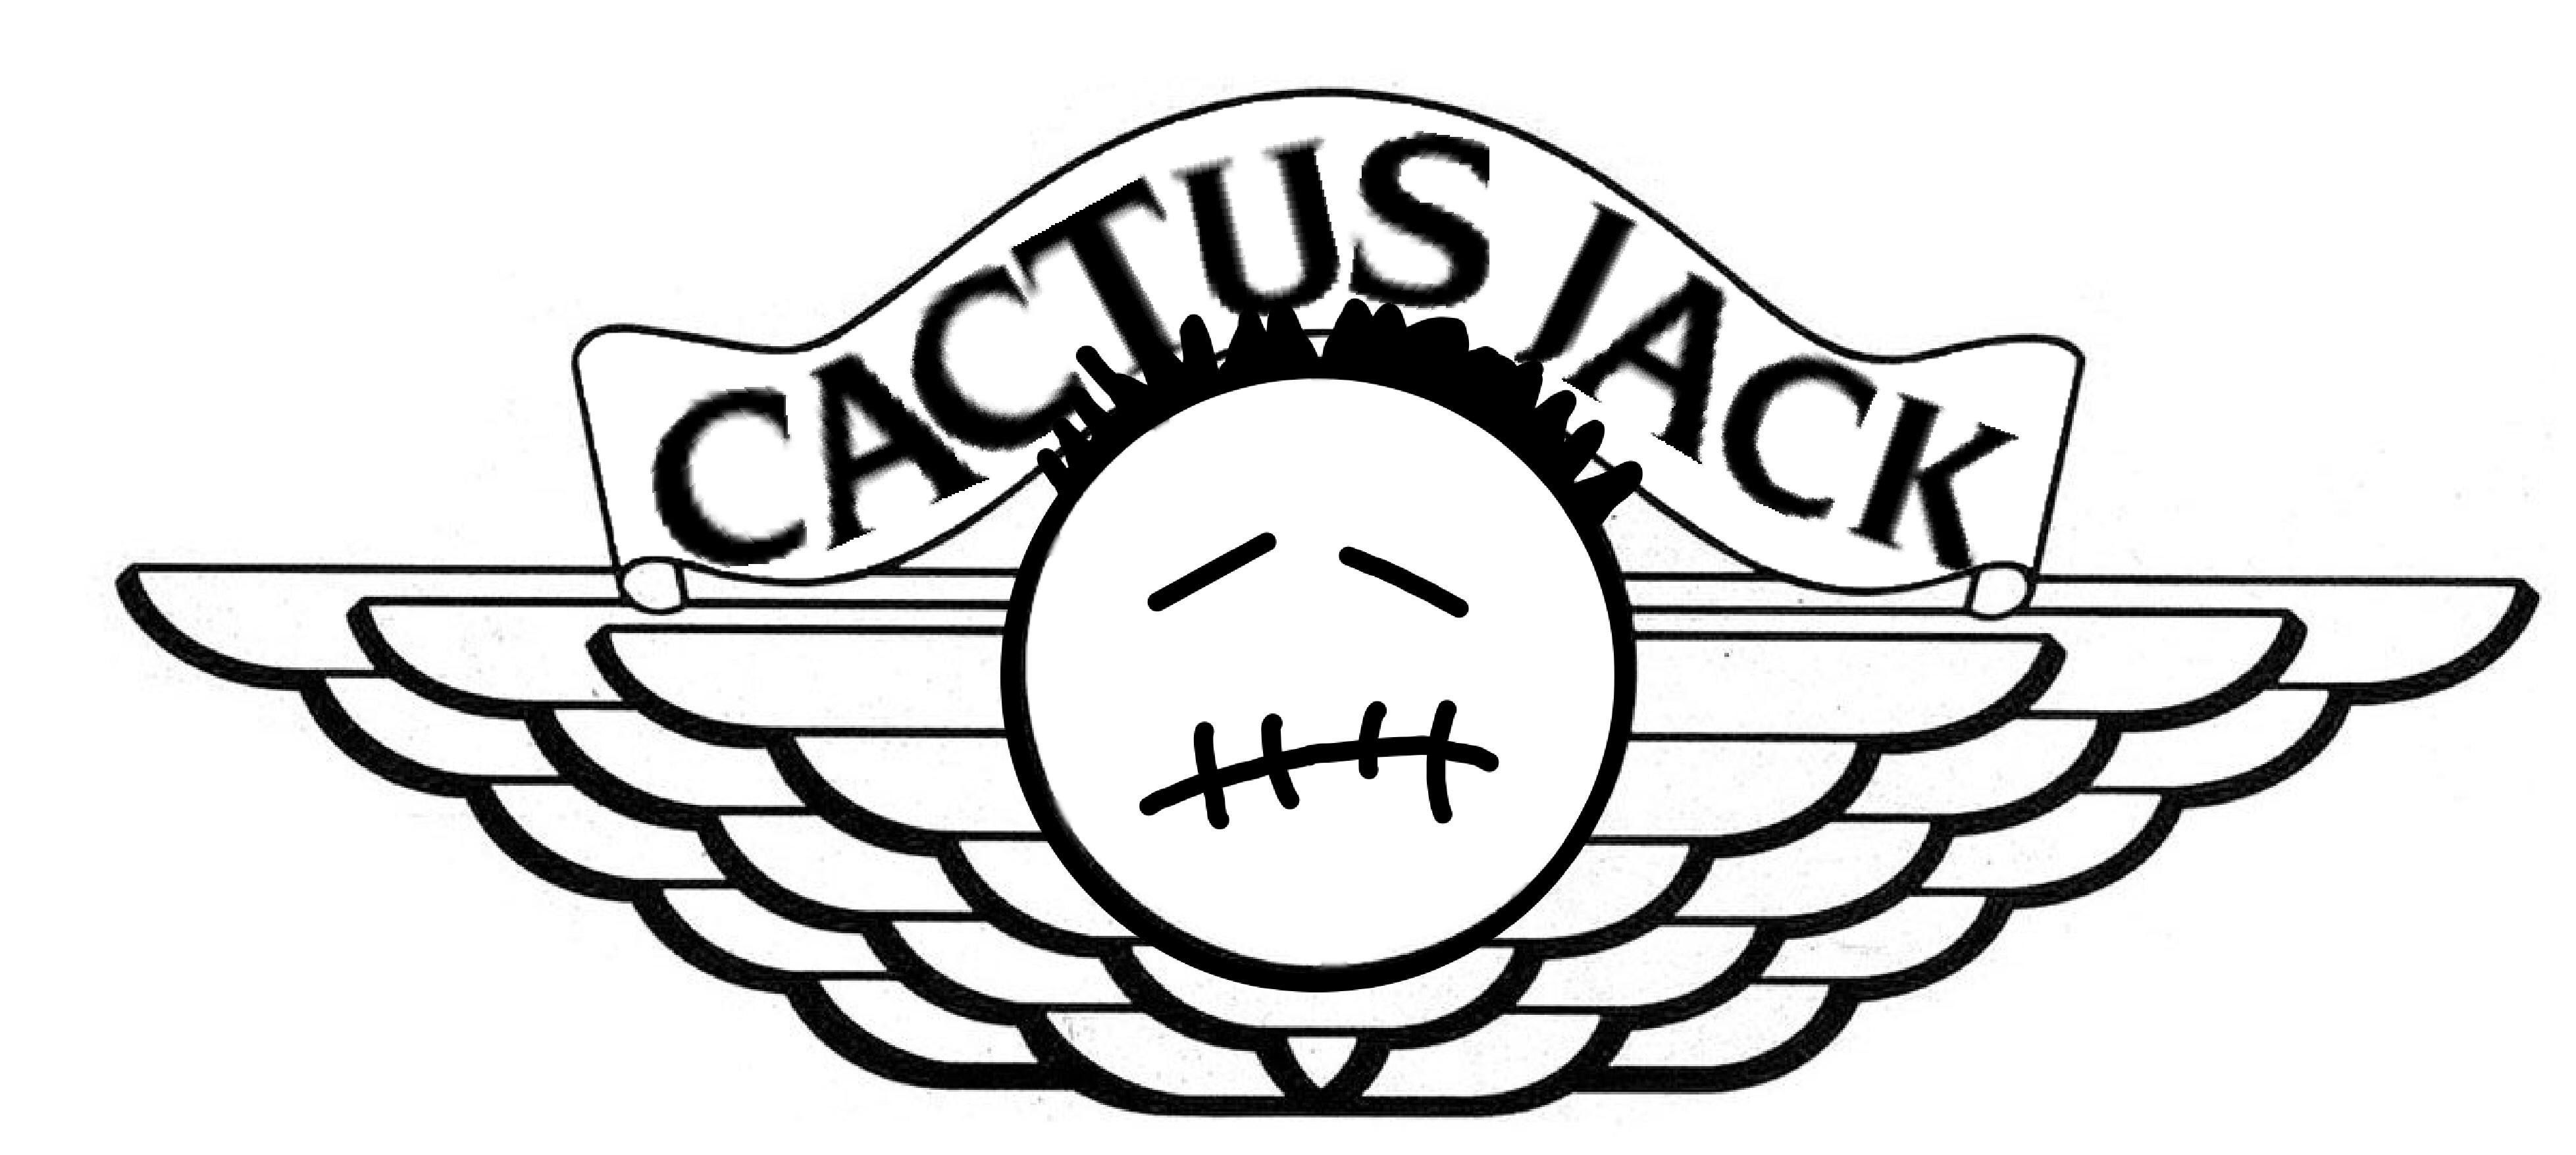 cactus jack logo